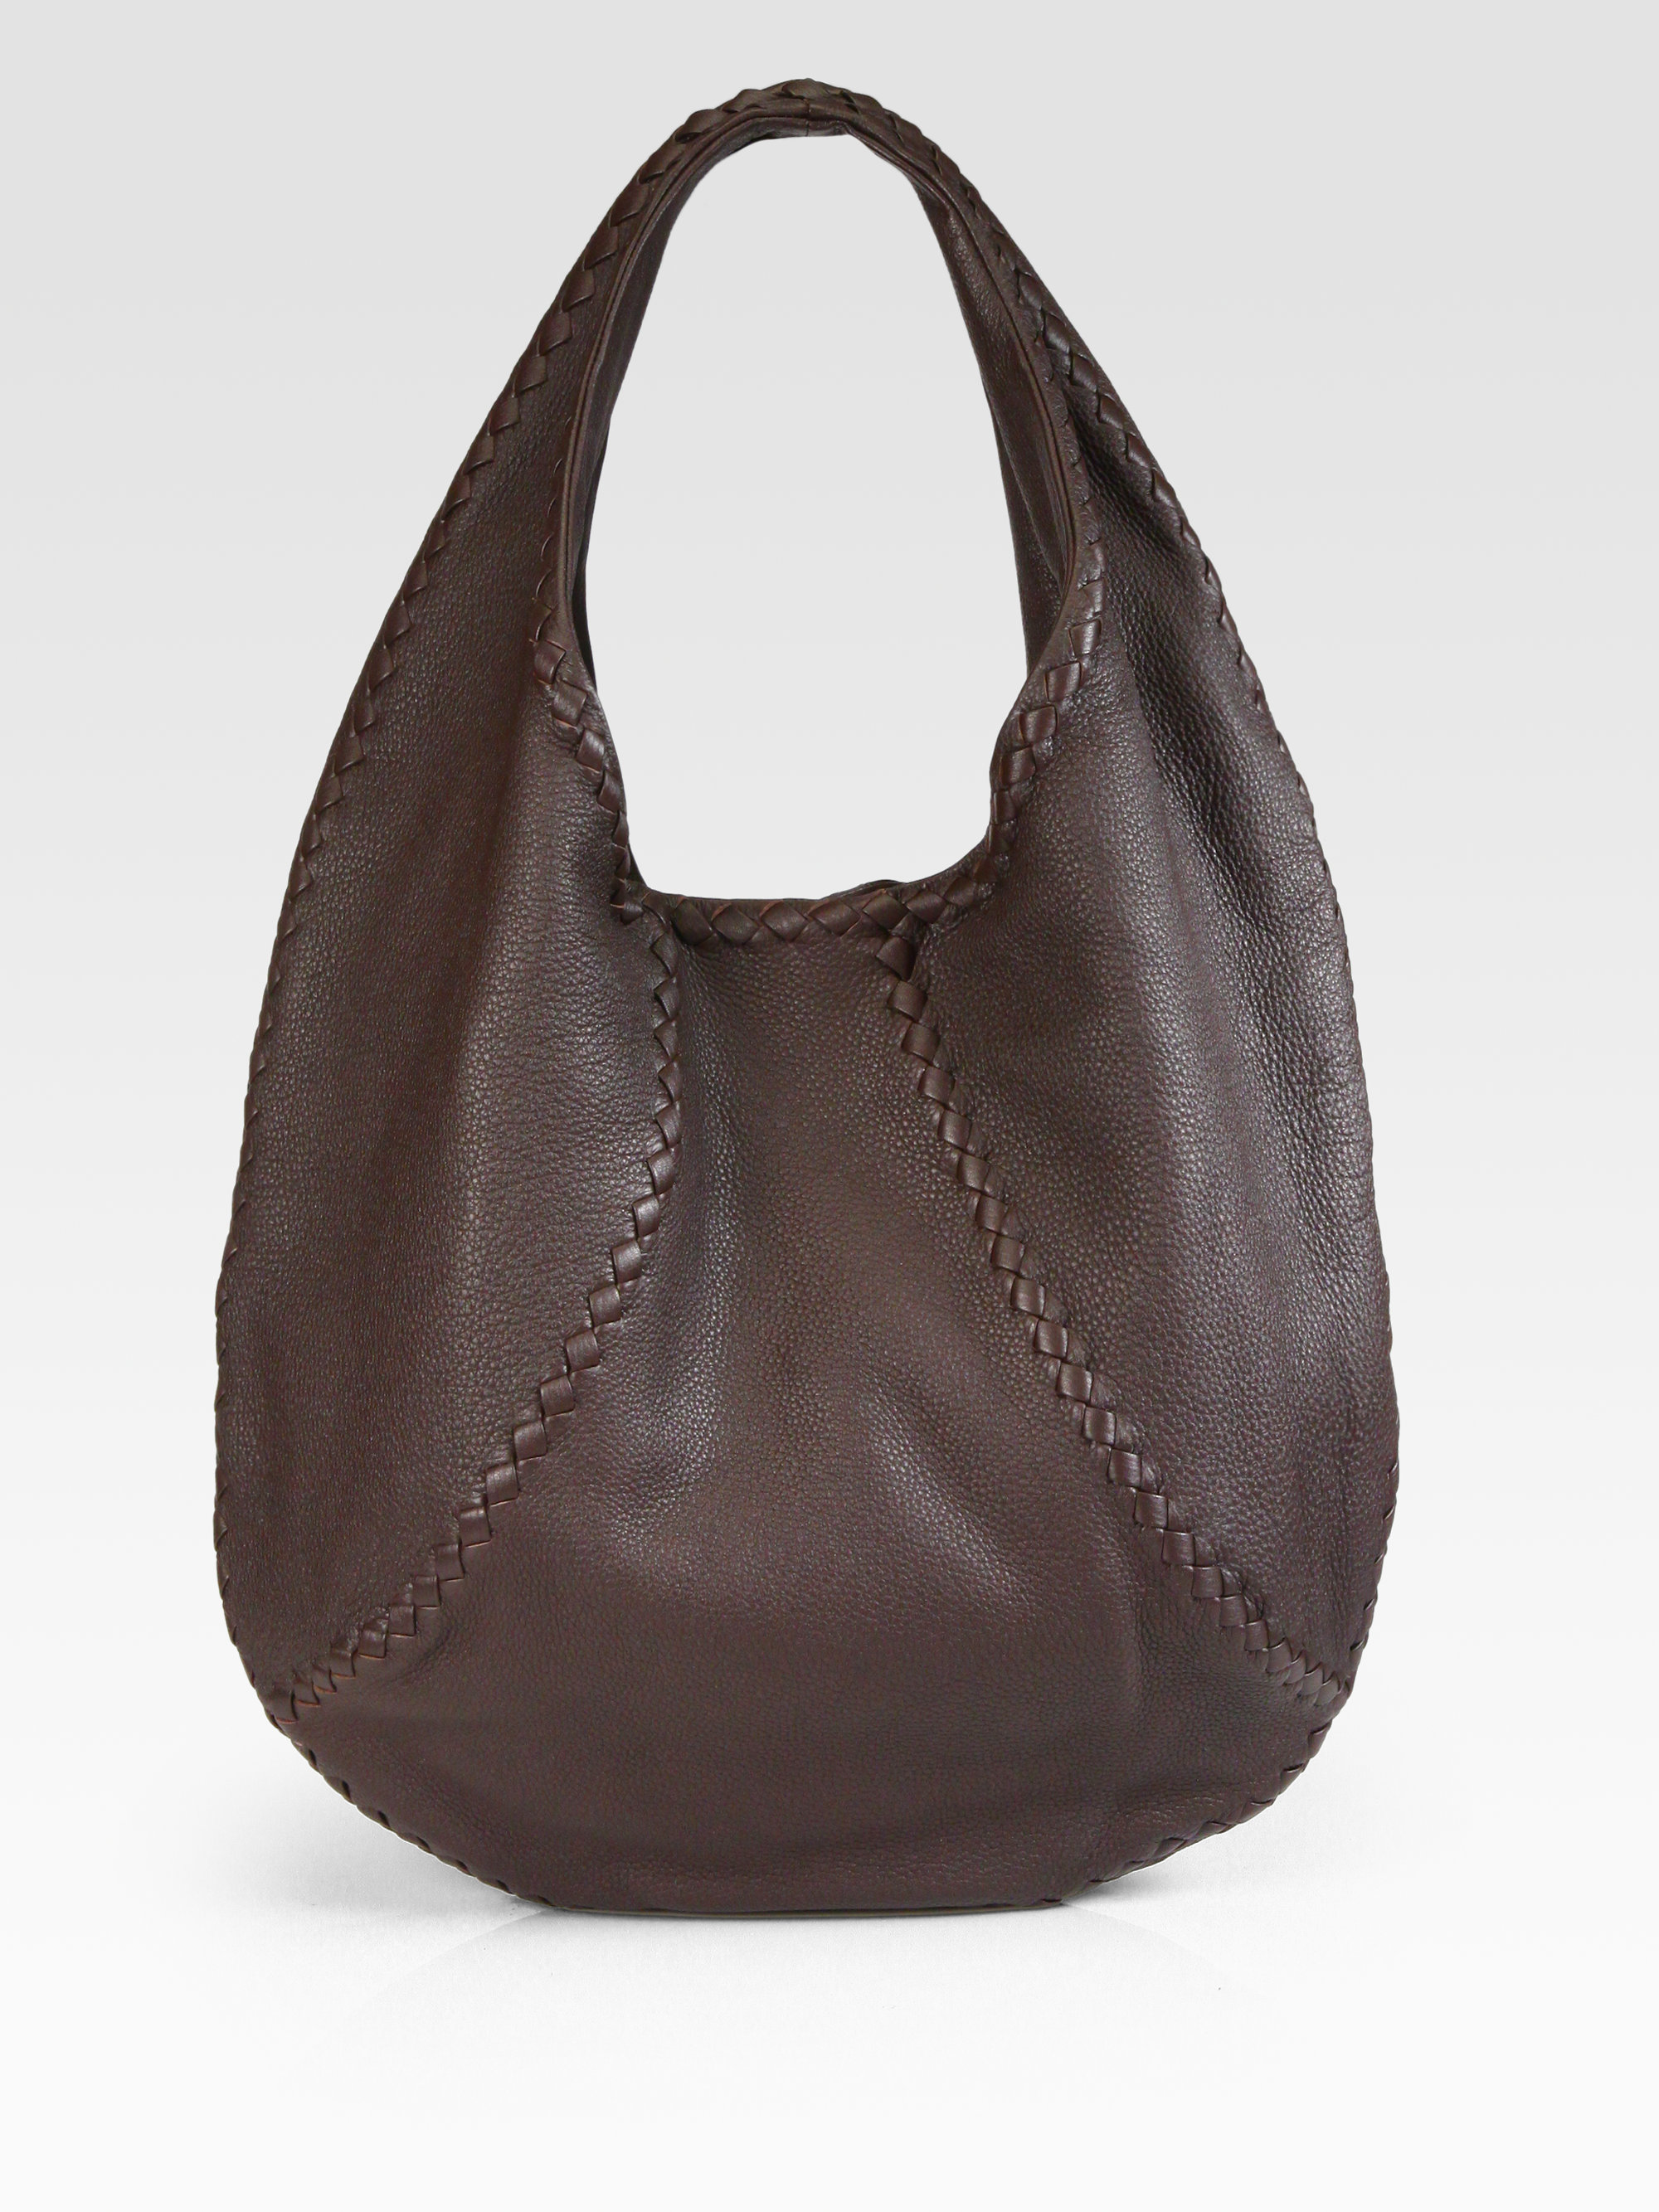 Bottega Veneta Cervo Large Leather Hobo Bag in Brown (maroon) | Lyst